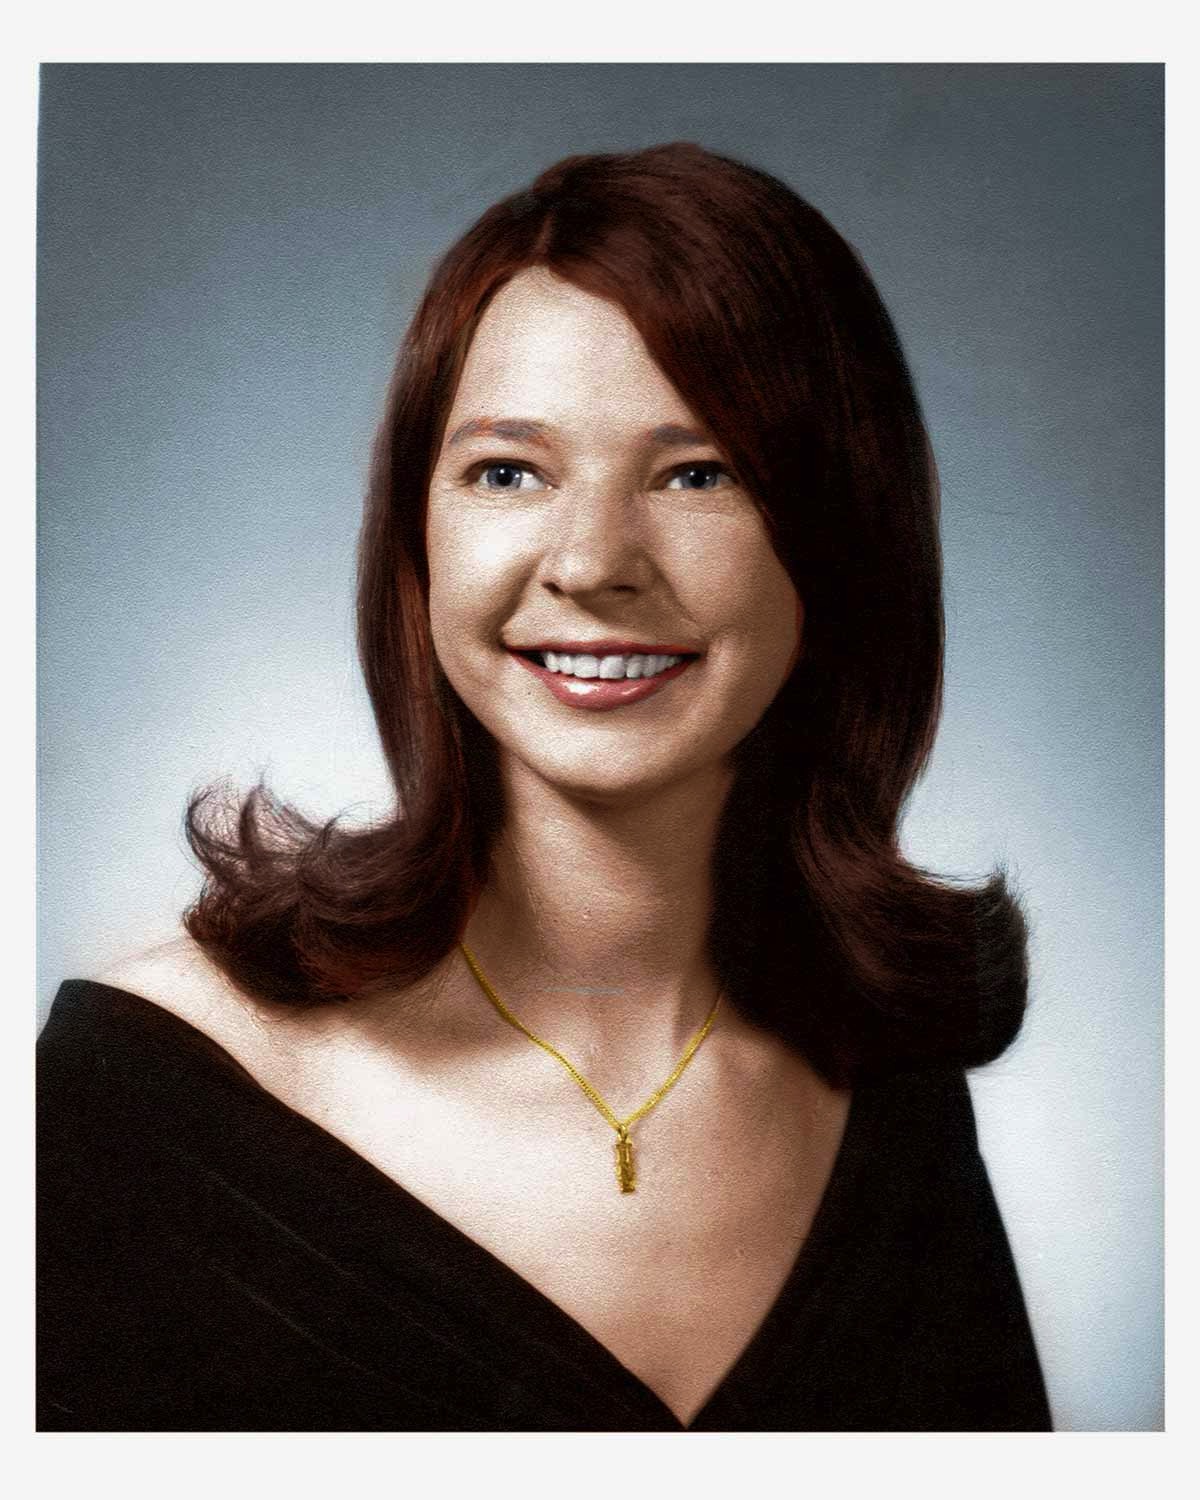 High school graduation image, colored